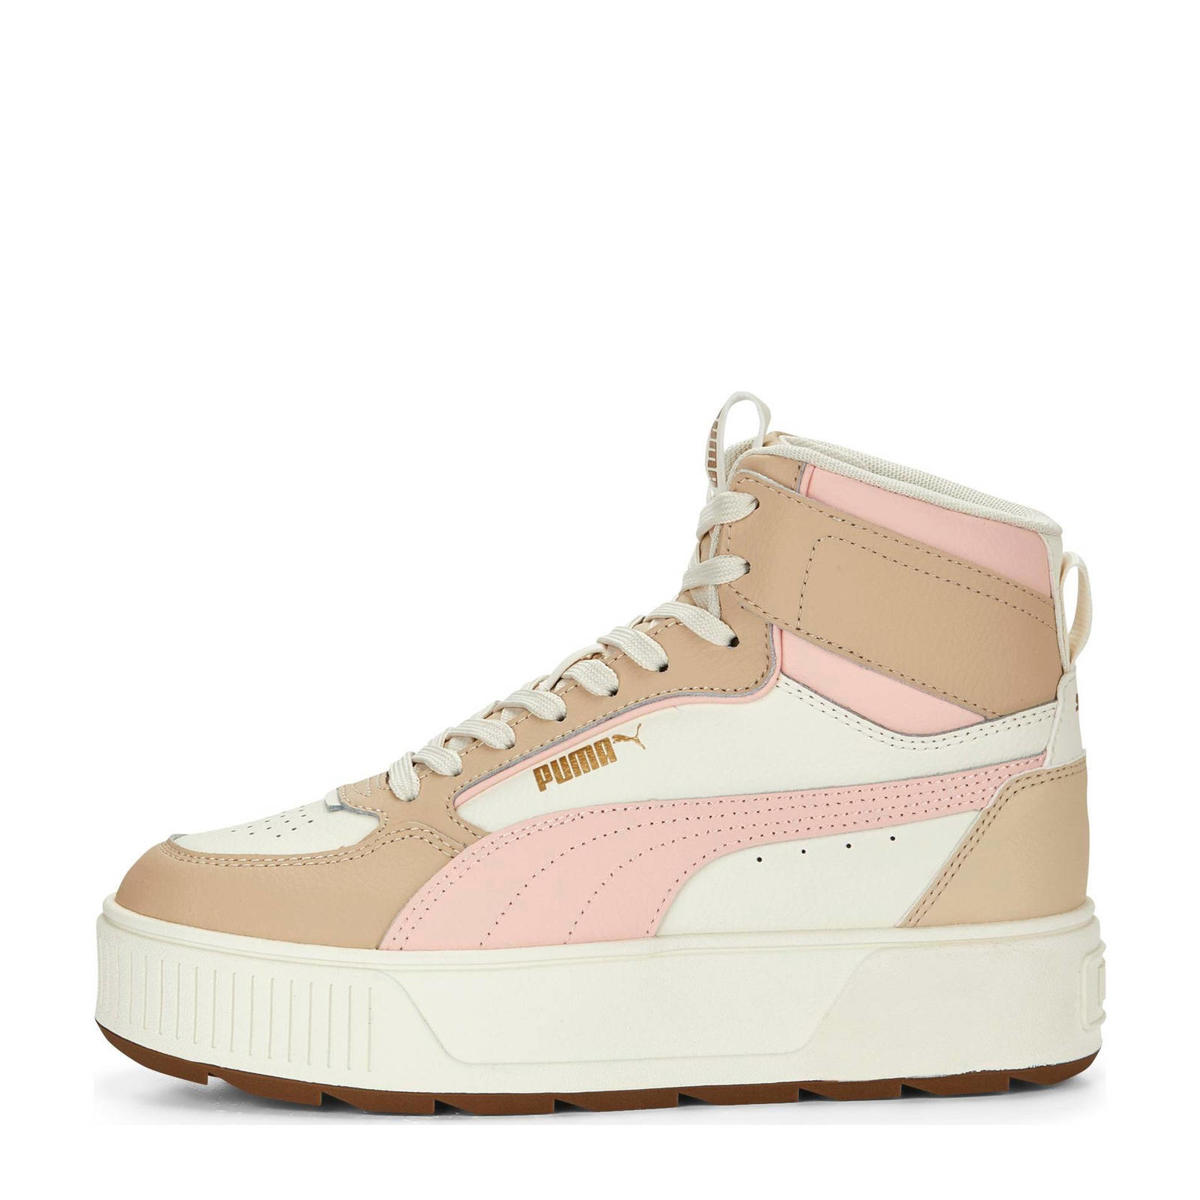 Lezen Onderbreking veeg Puma Karmen Rebelle sneakers wit/beige/roze | wehkamp